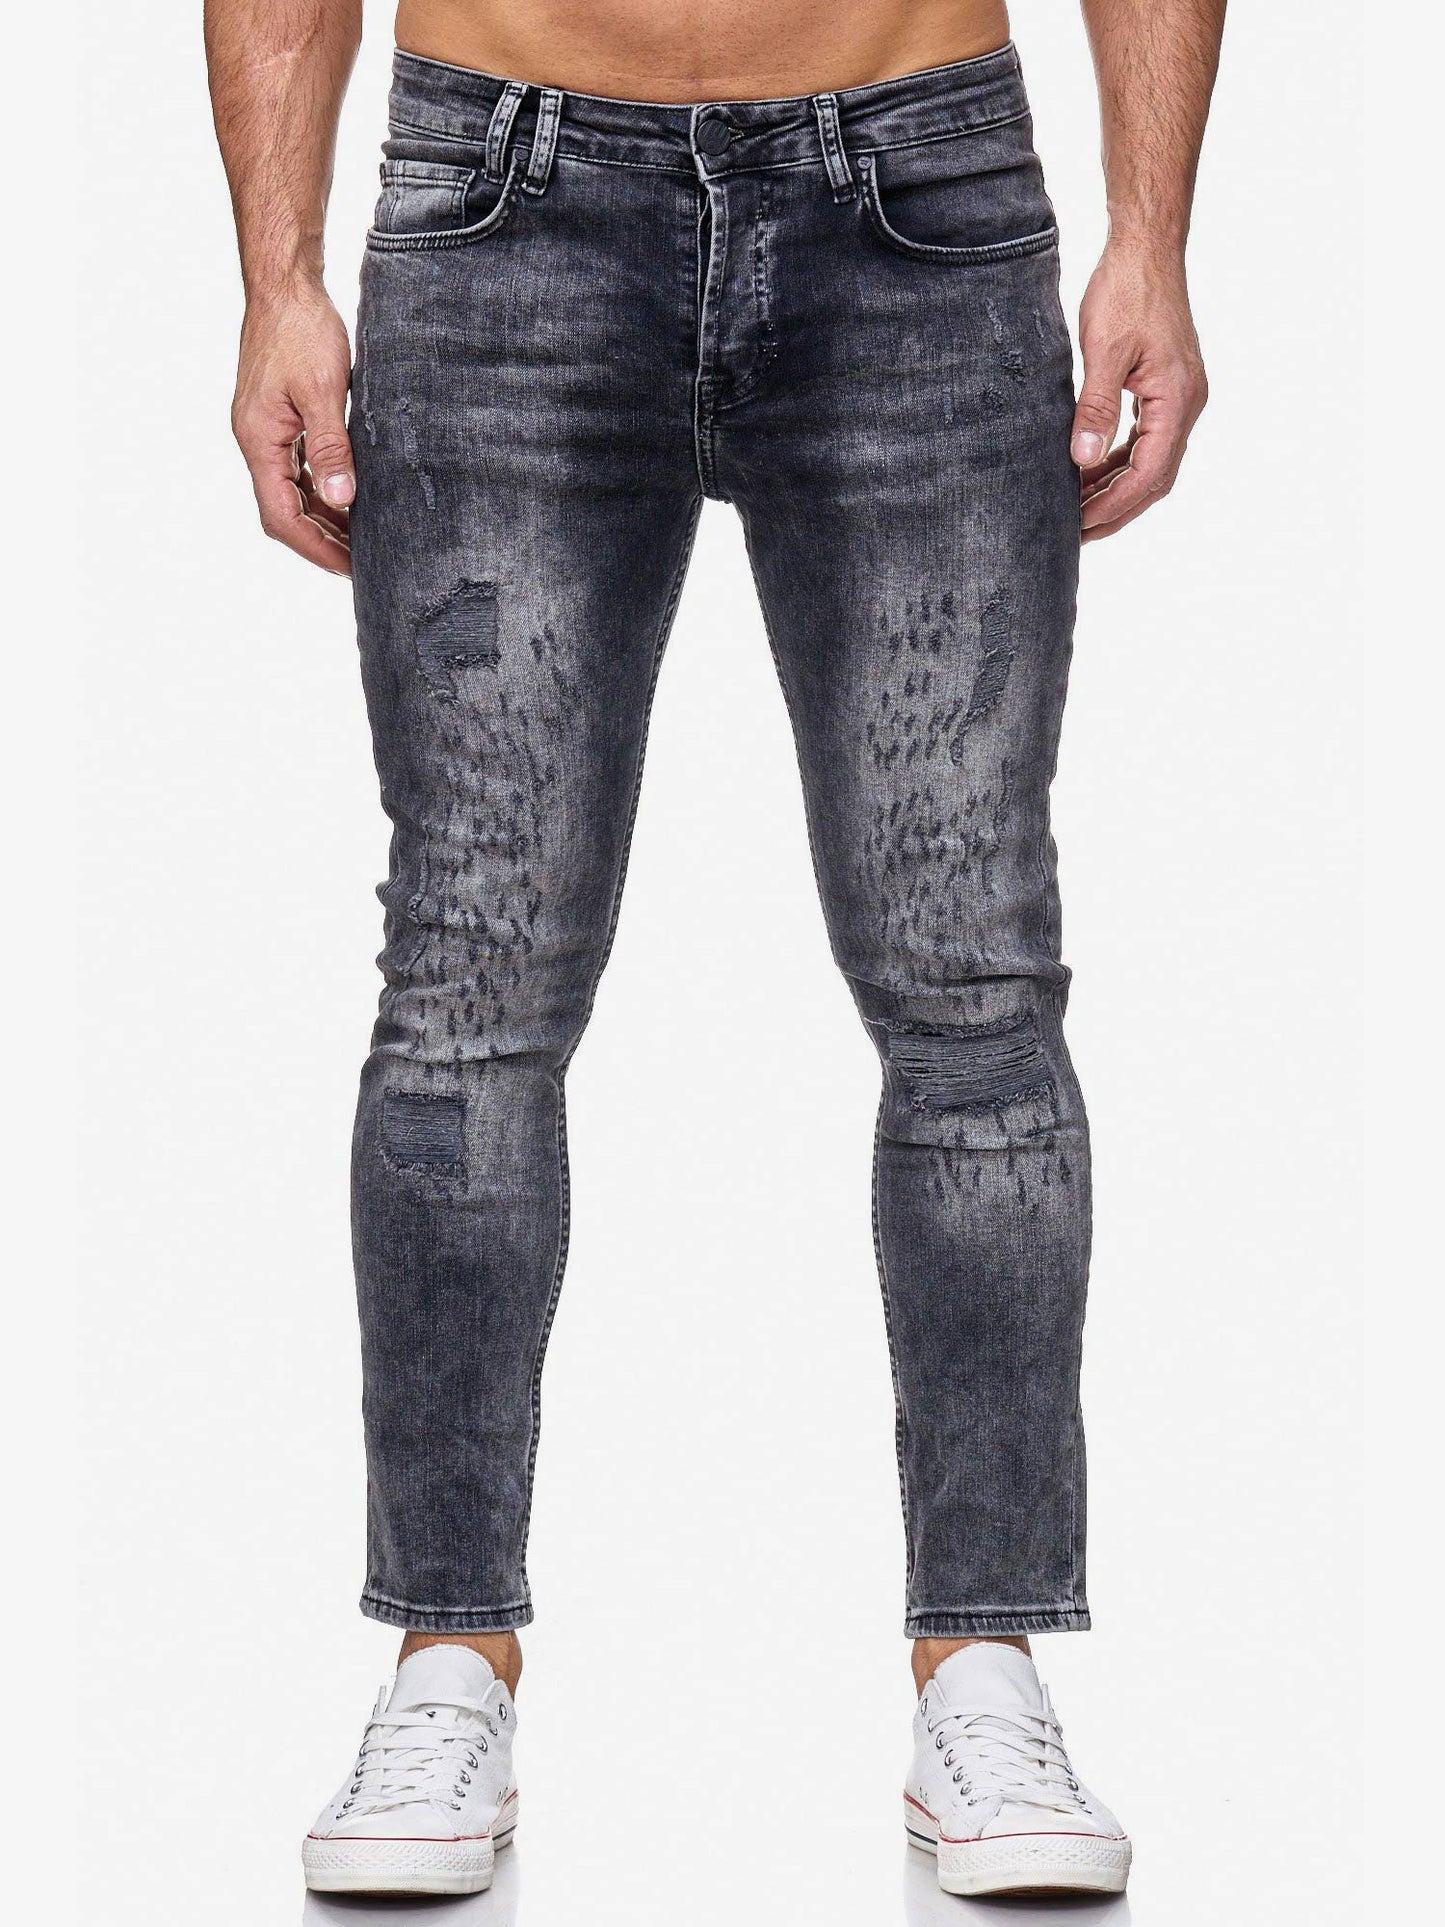 Tazzio Herren Jeans Skinny Fit 17516